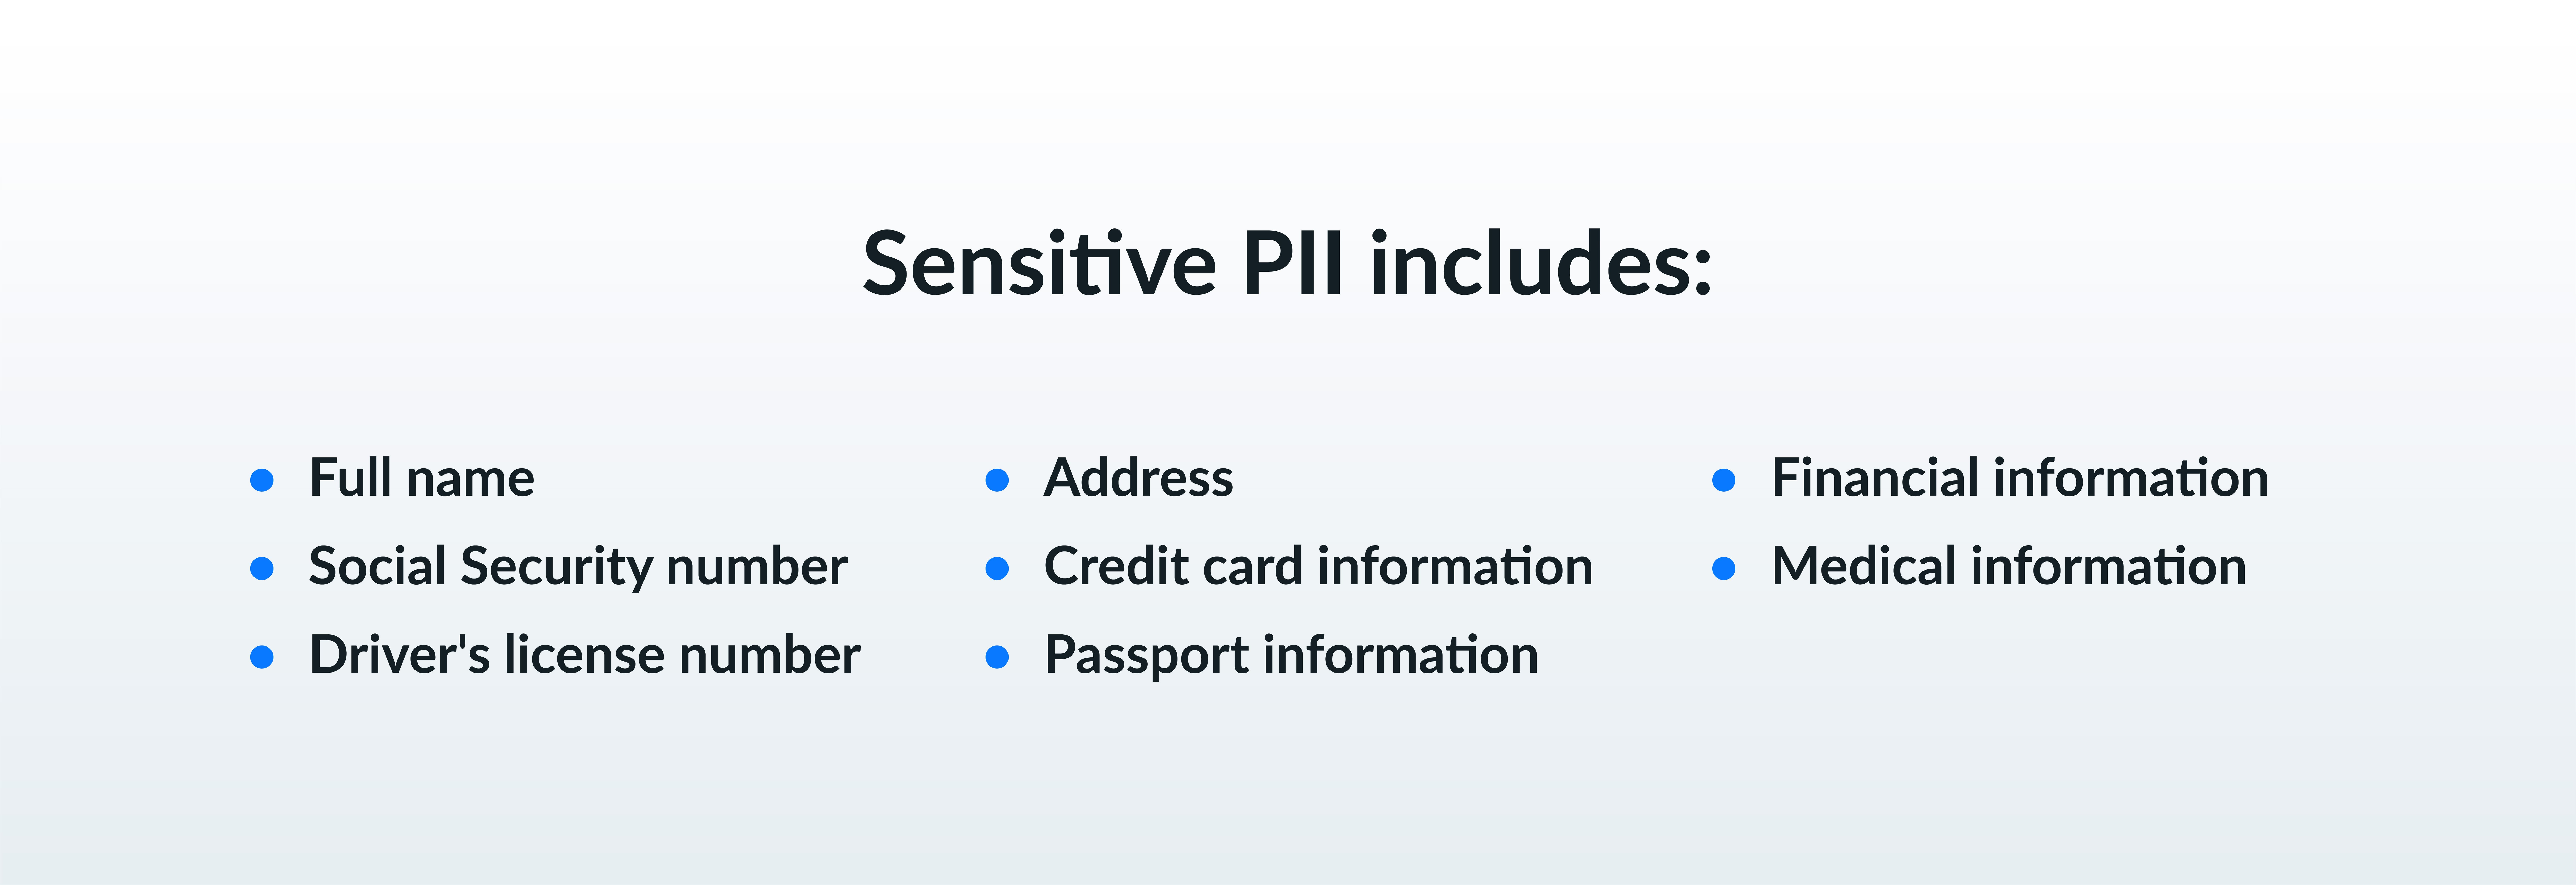 Sensitive PII includes: full name, social security number, driver's license number, address, credit card information, passport information, financial information, medical information